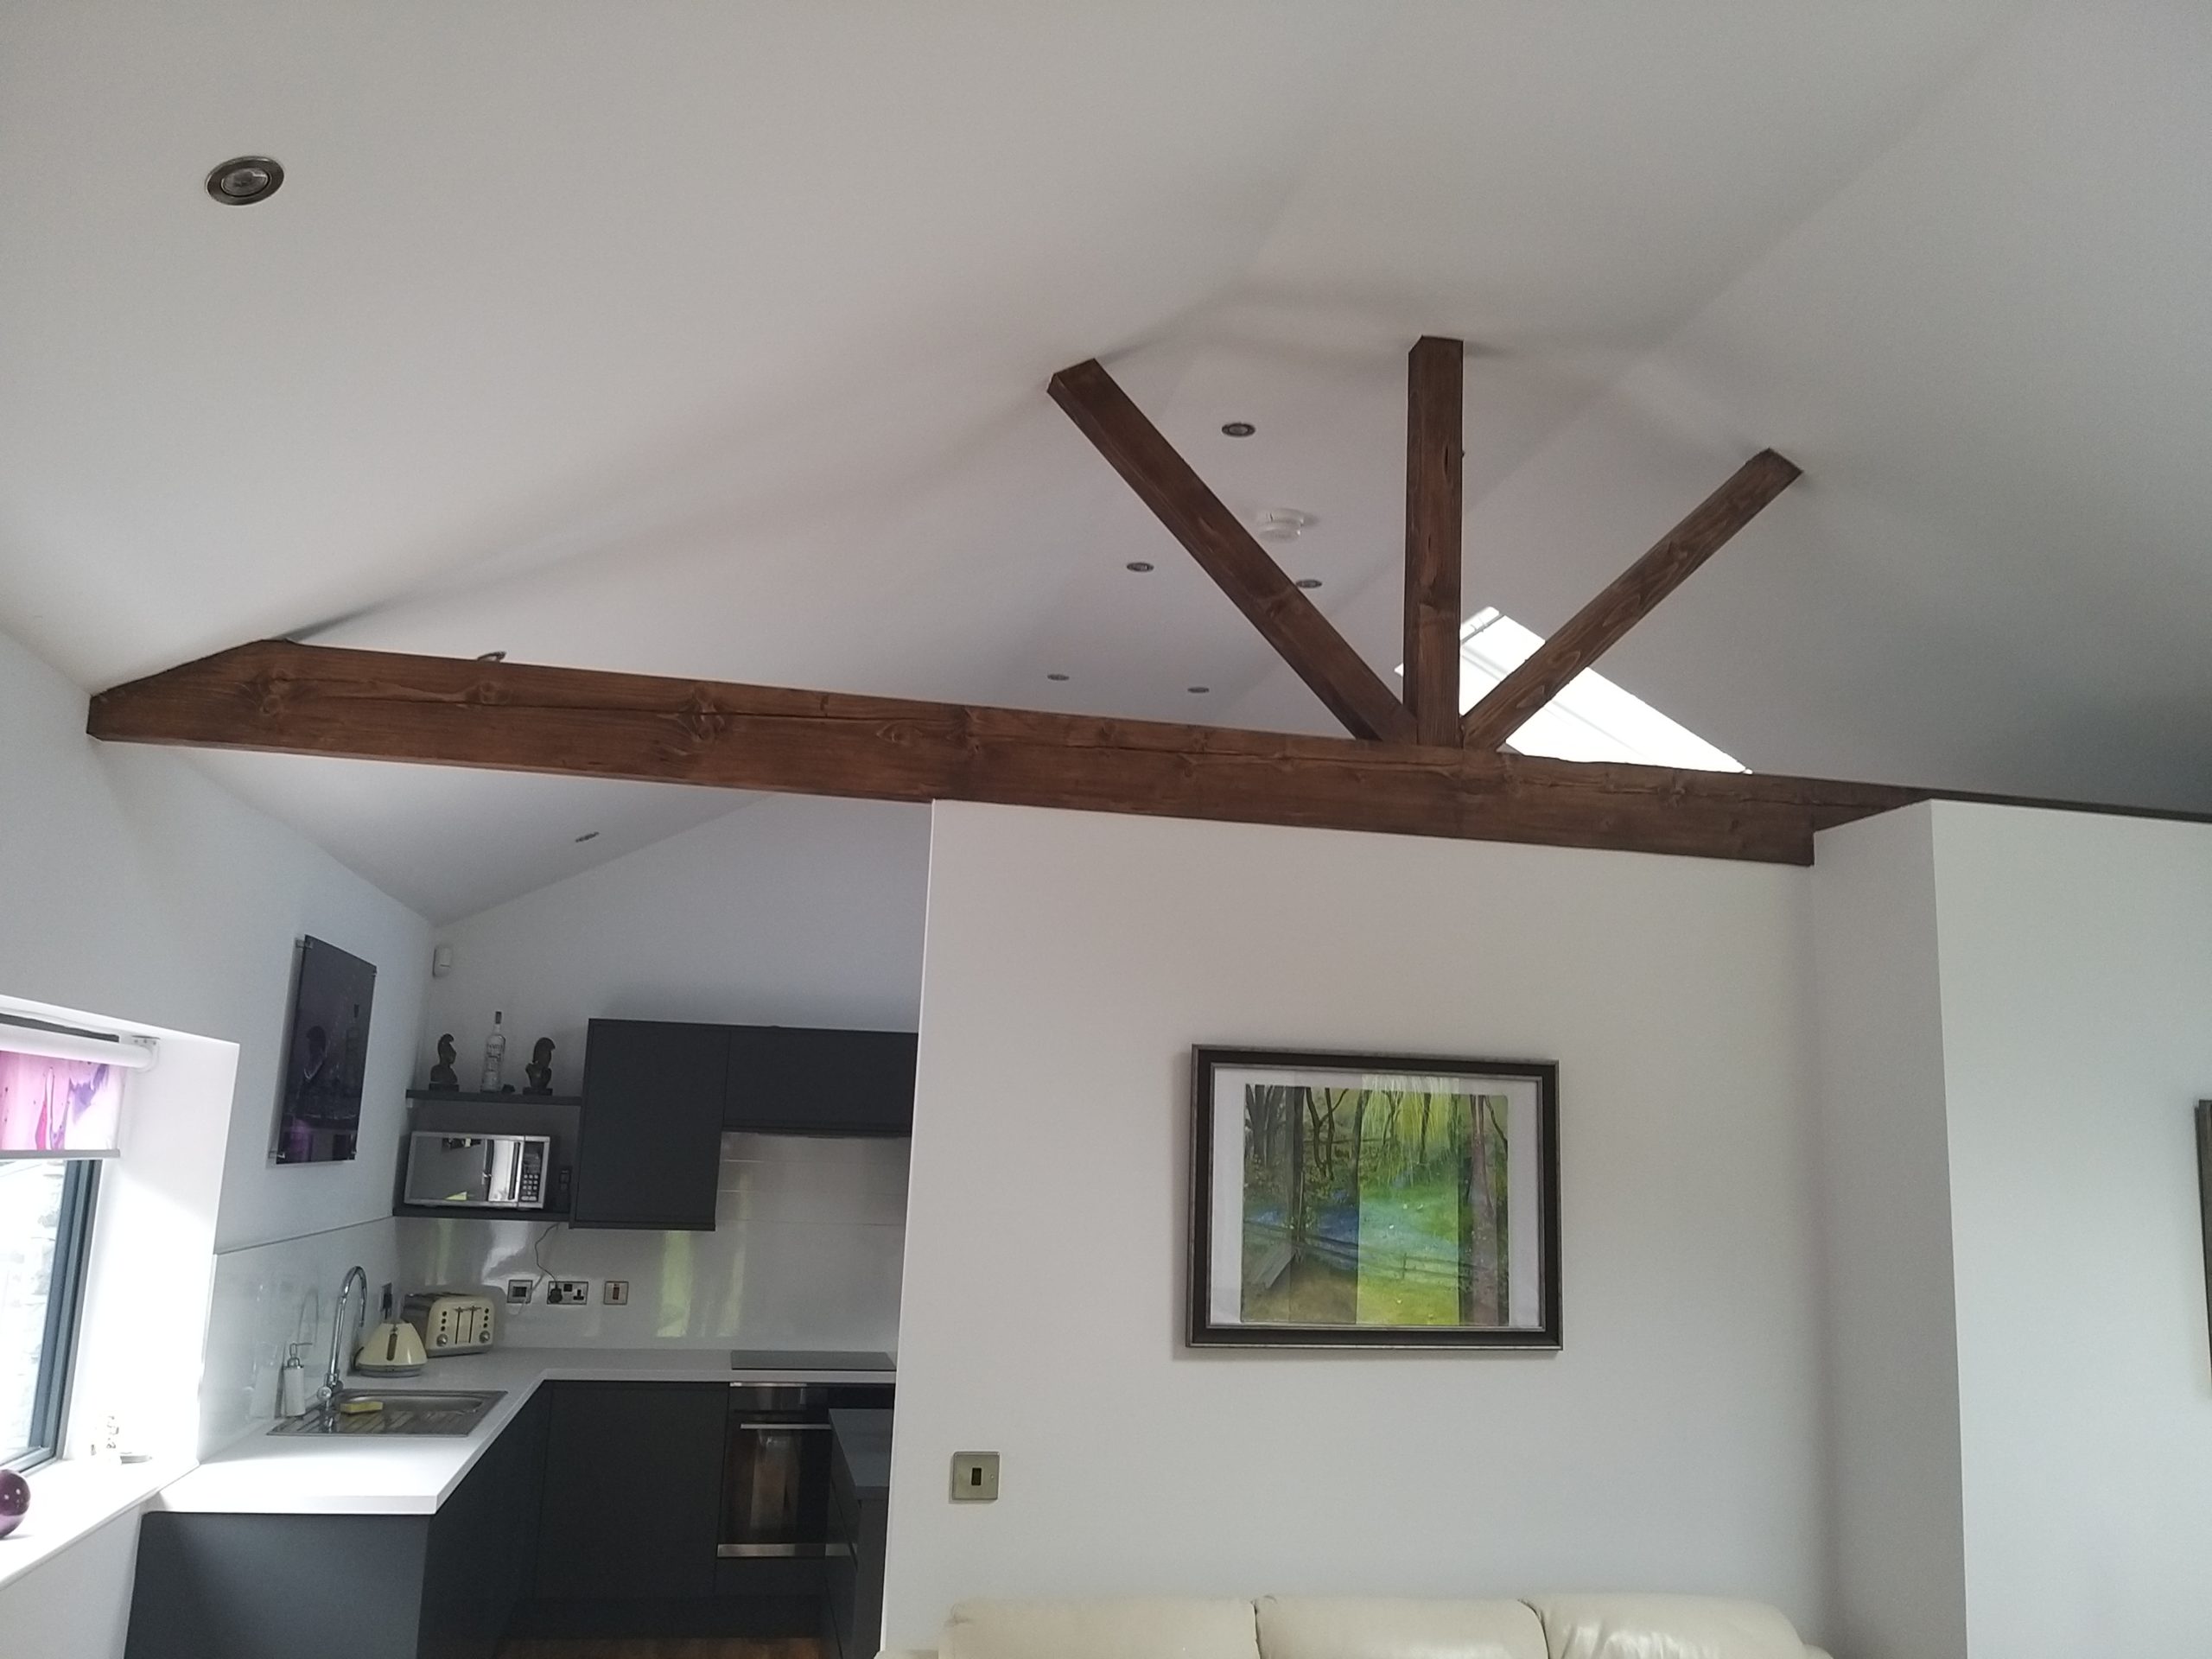 Wooden joist beams in a garage conversion